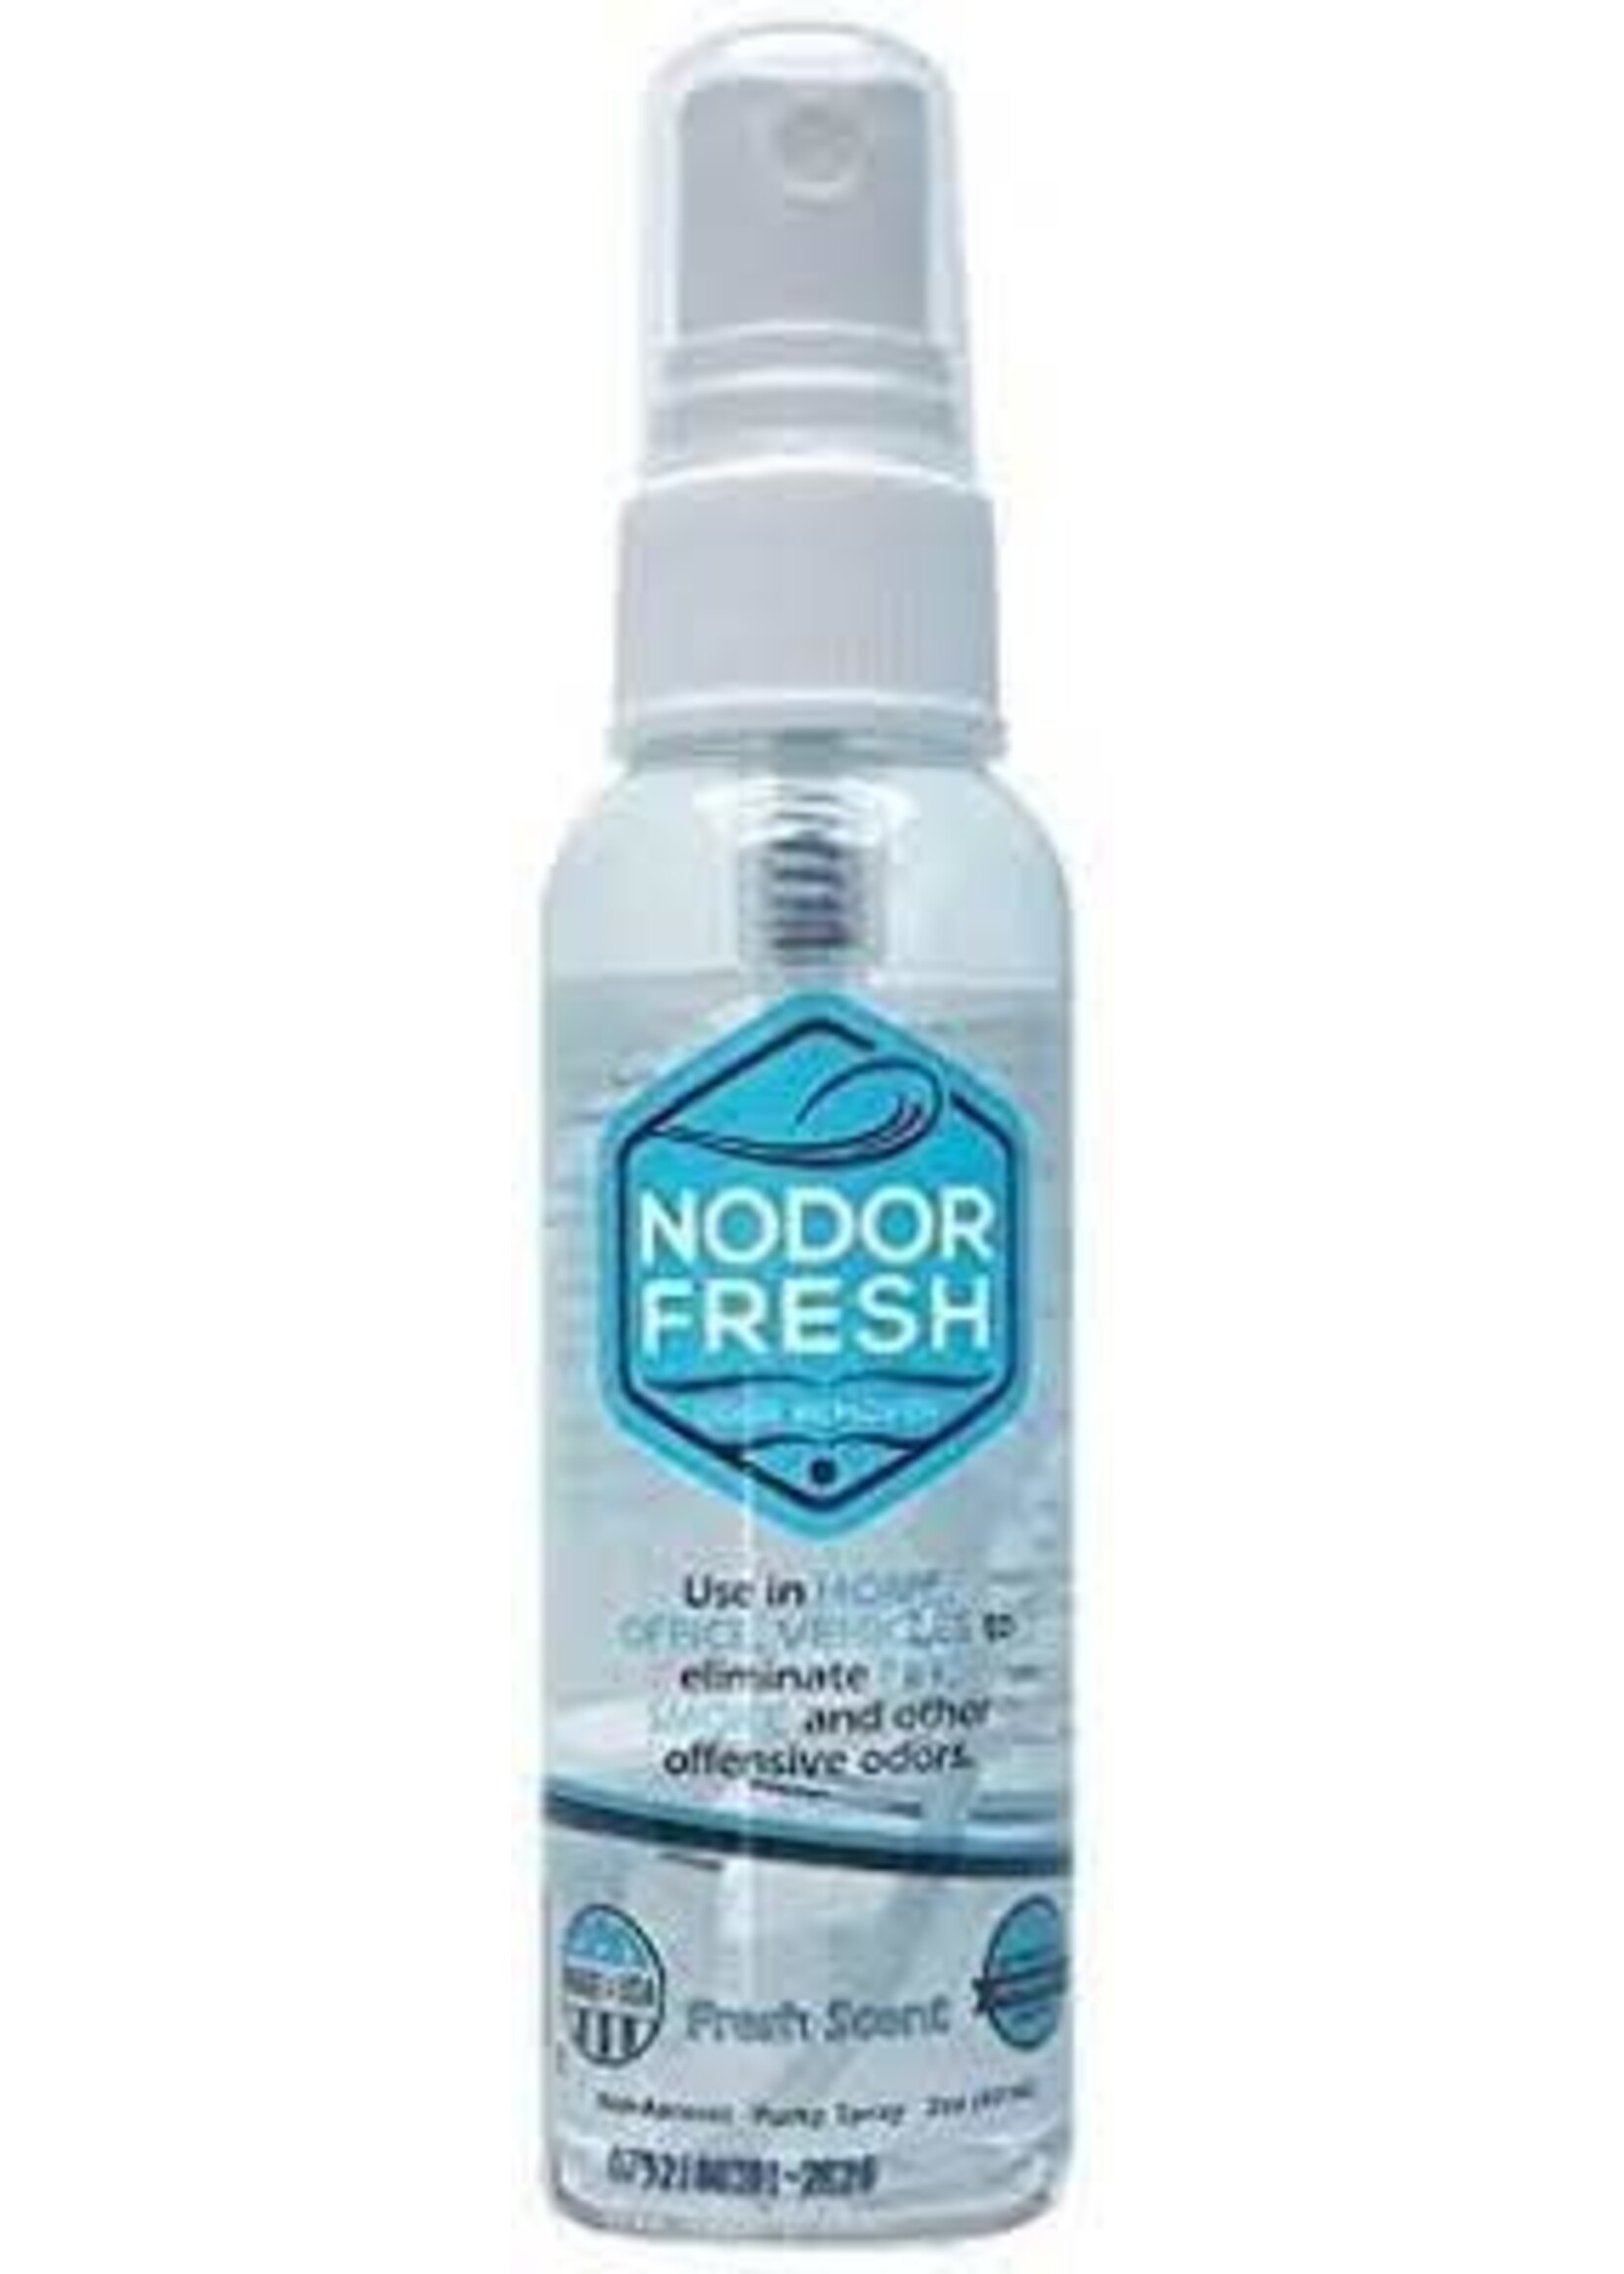 Nodor Nodor Fresh Air Deodorizer